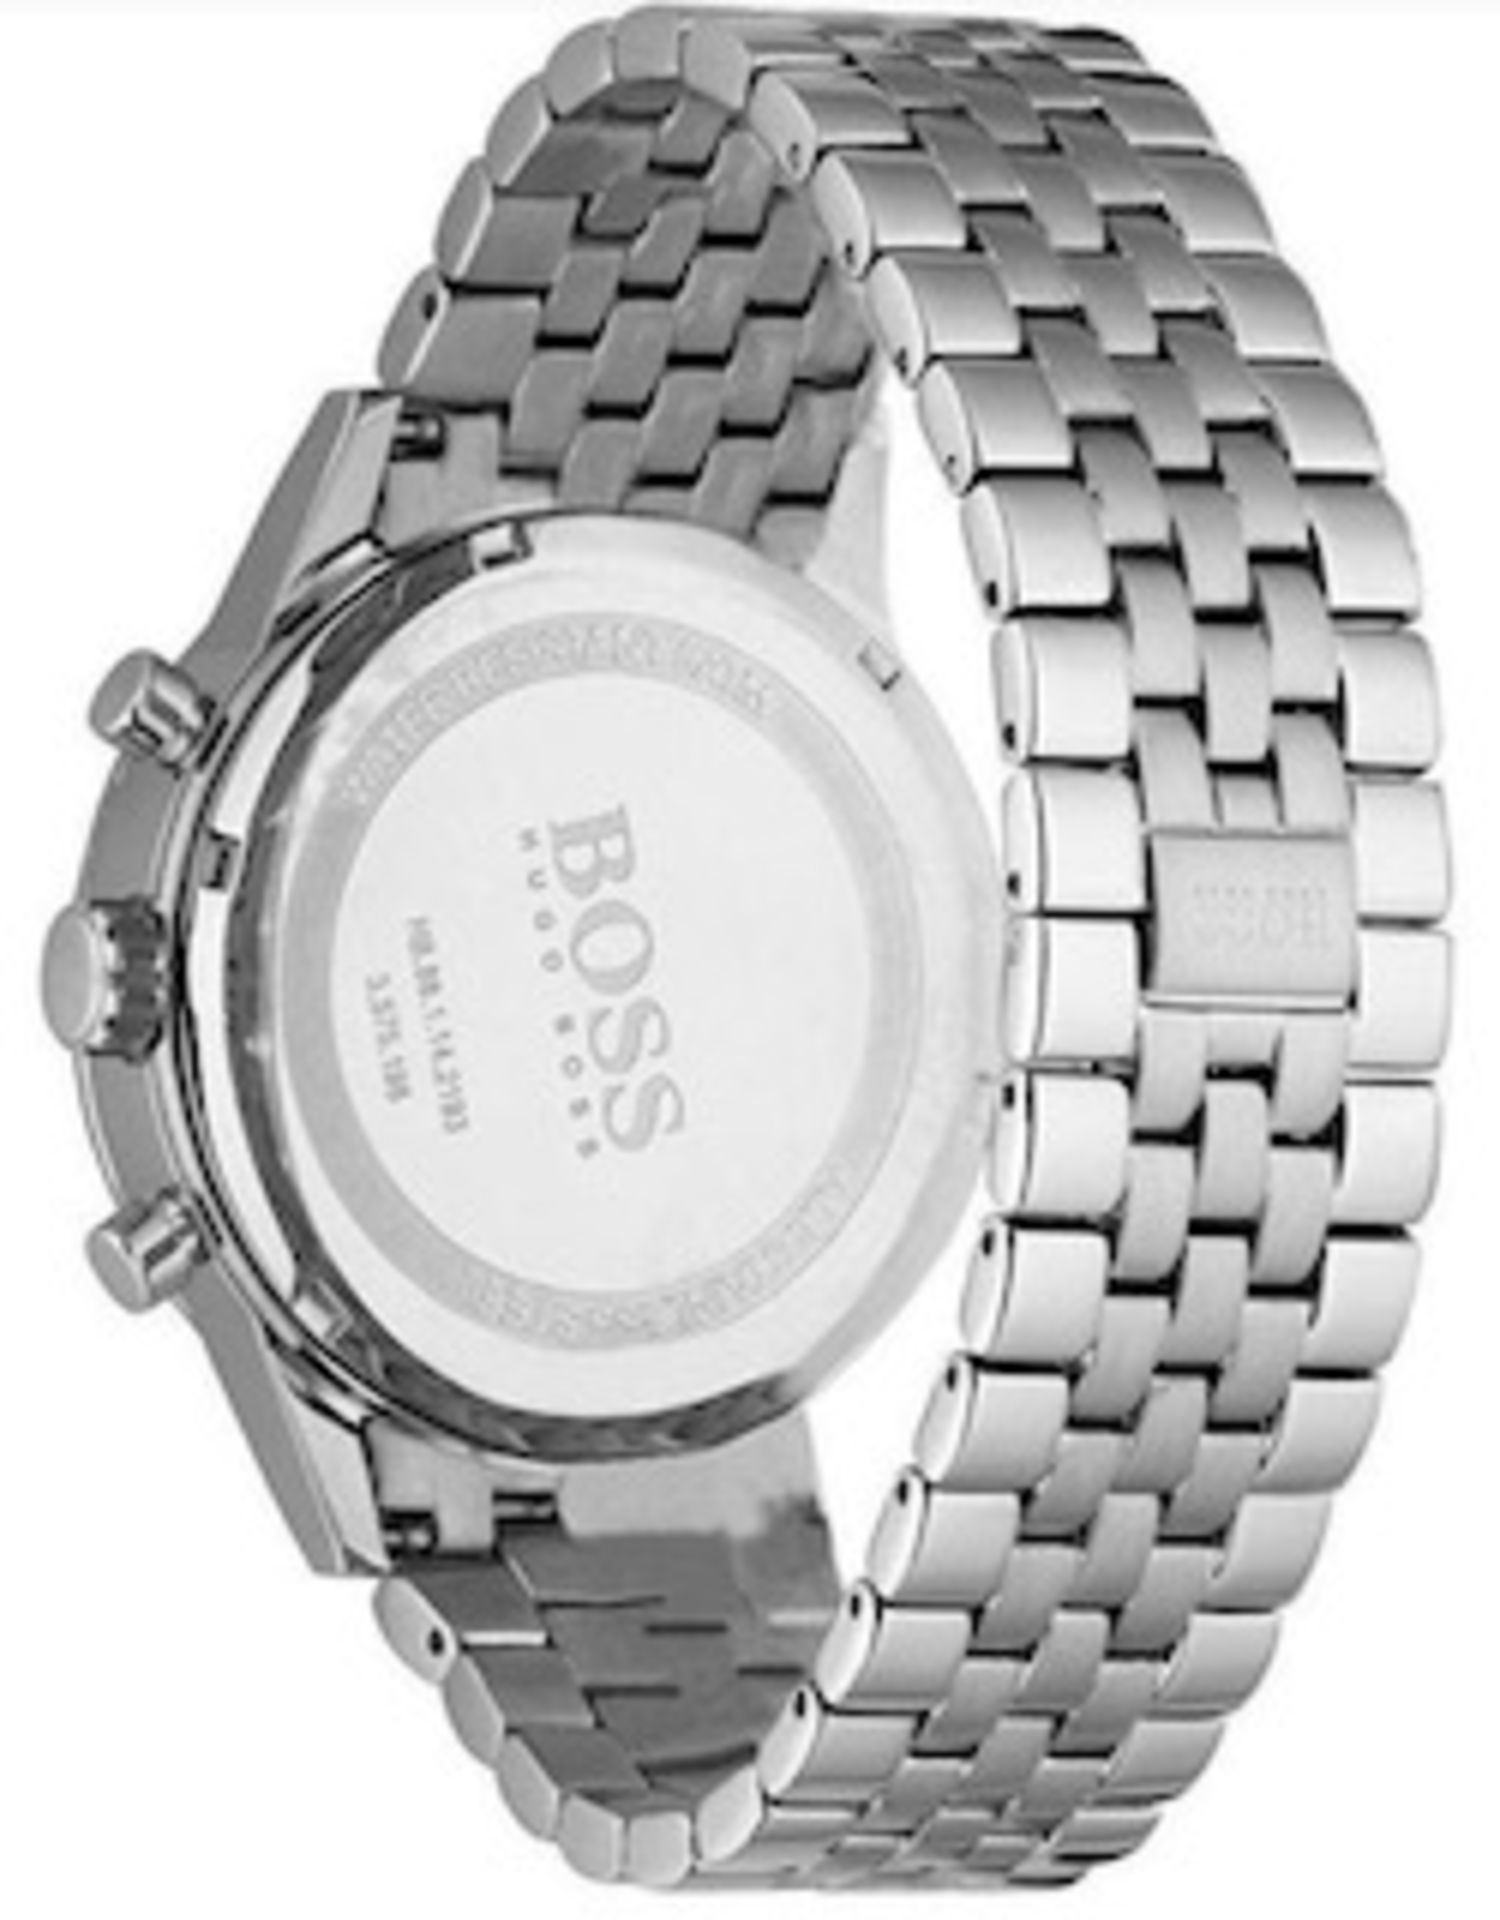 Hugo Boss 1512446 Men's Aeroliner Black Dial Silver Bracelet Chronograph Watch - Image 6 of 6